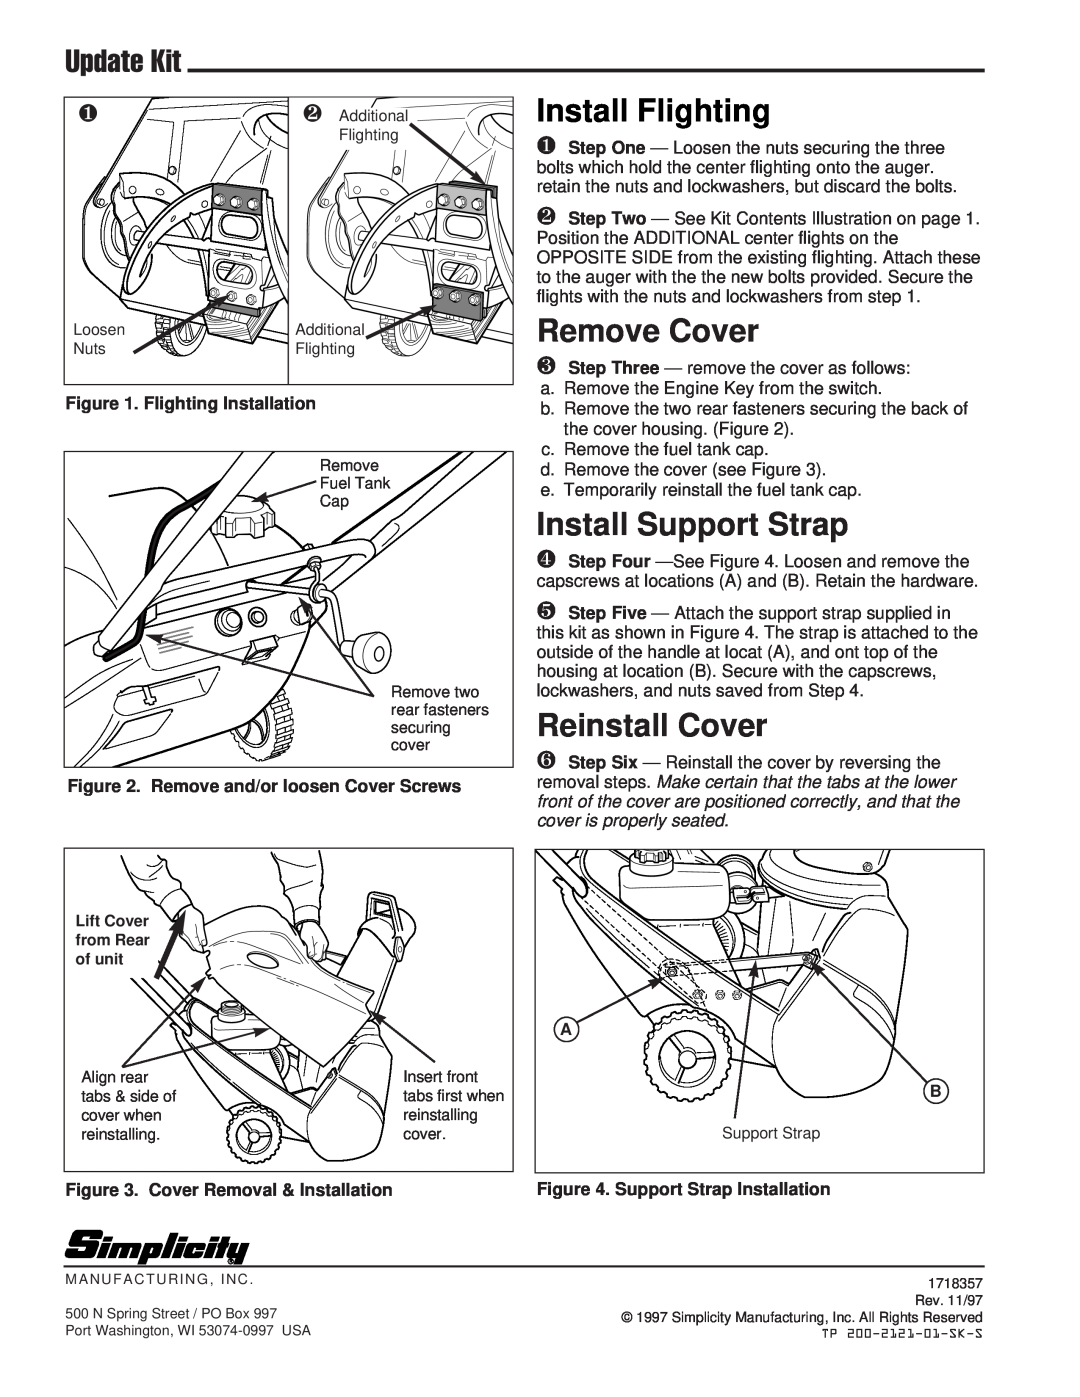 Simplicity TP 200-2121-01-SK-S Update Kit, Flighting Installation, Remove and/or loosen Cover Screws, Install Flighting 